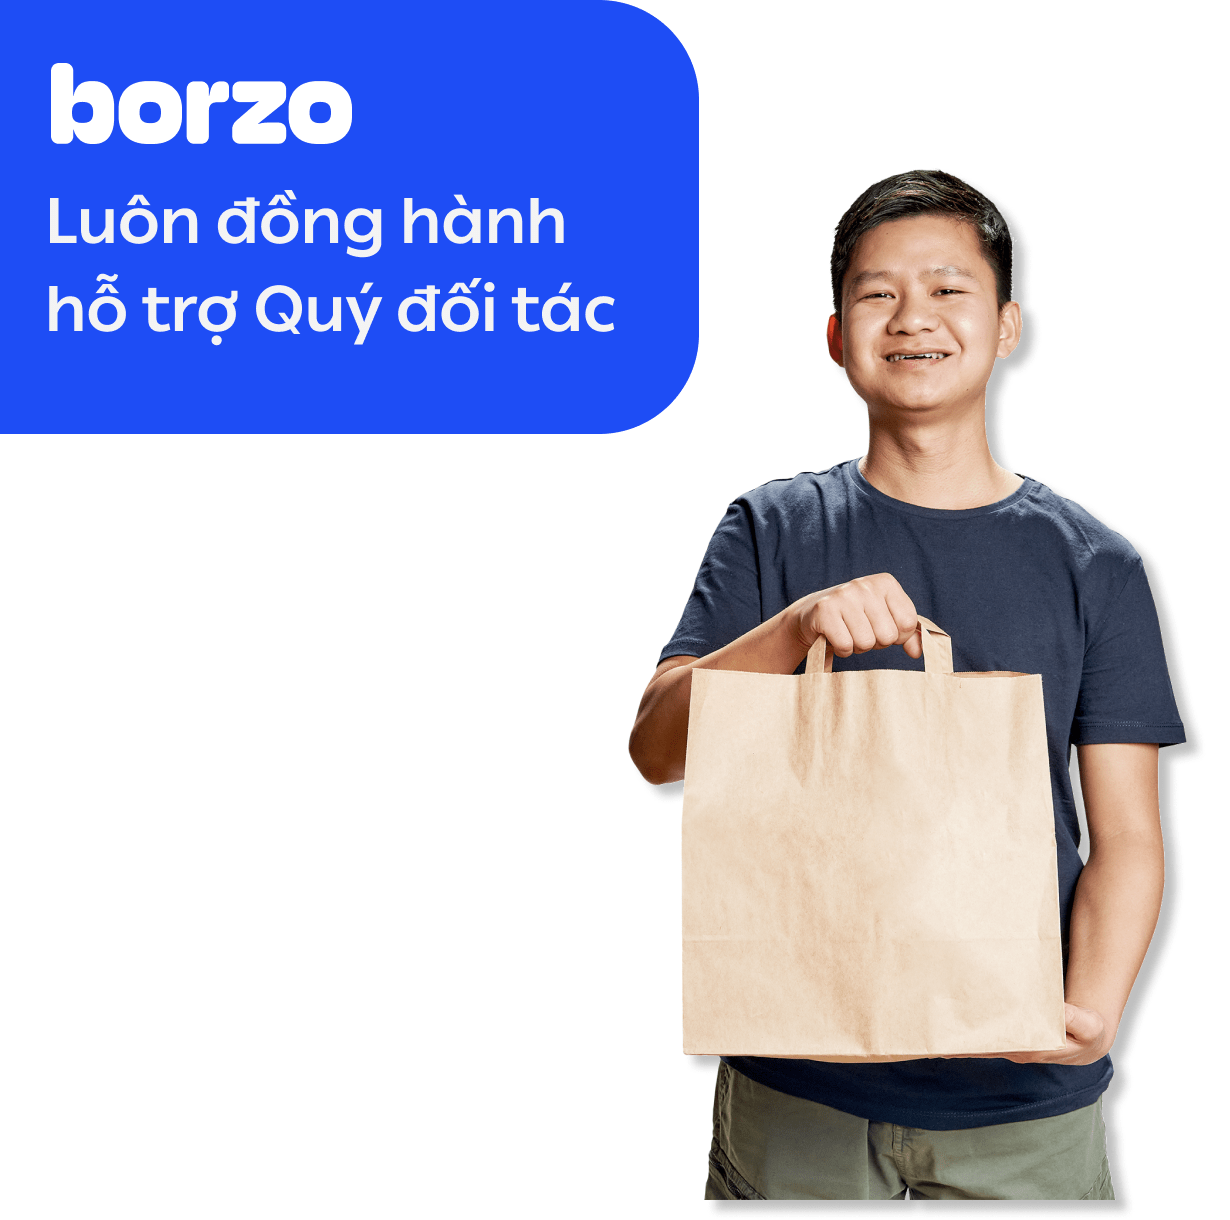 borzo-the-hien-tinh-than-luon-dong-hanh-cung-cac-doi-tac-tai-xe-1640245021.png